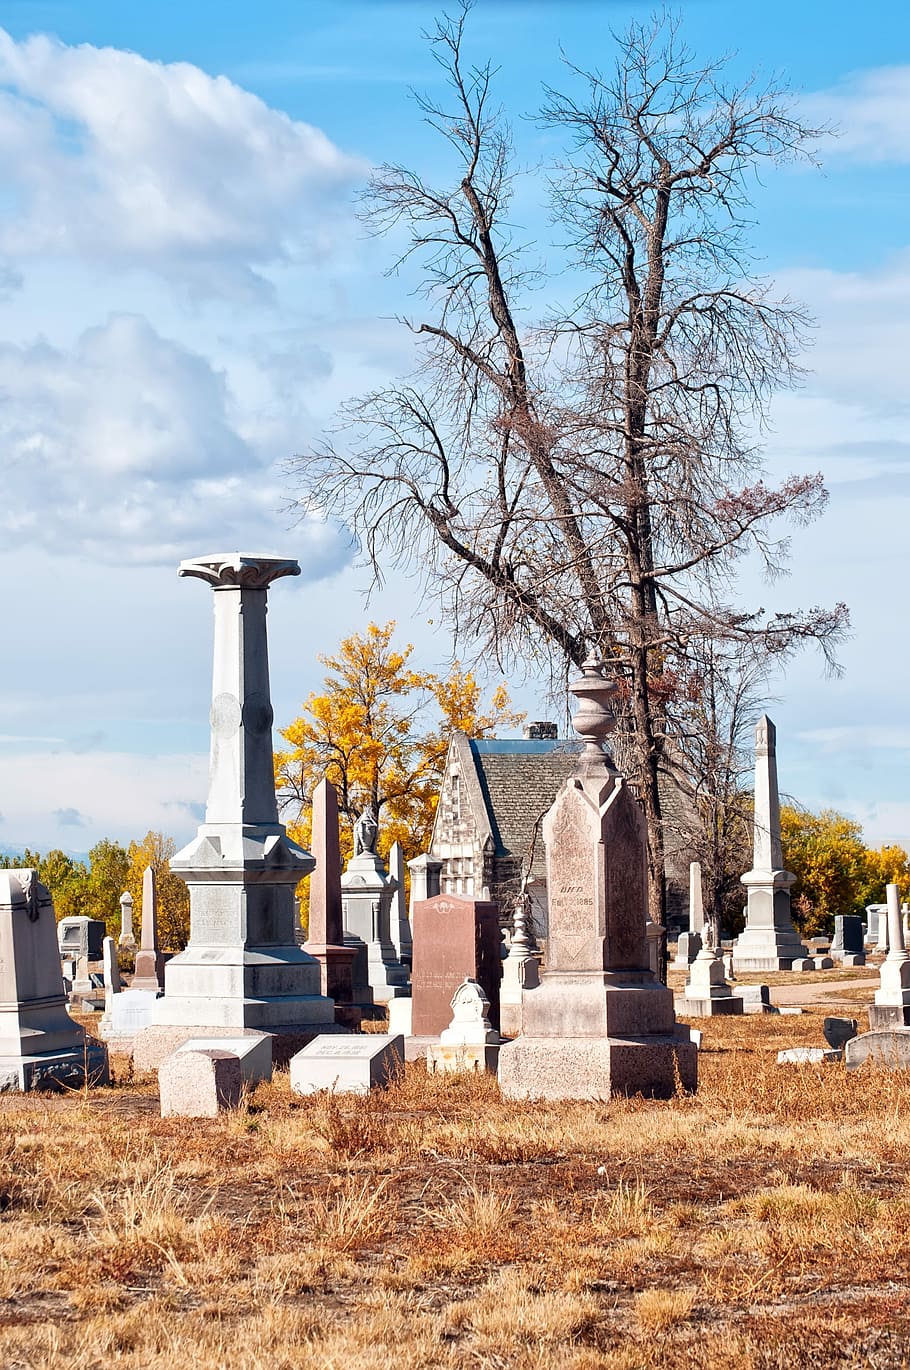 Graveyard, Tombstones, Cemetery, old, death, dead, black, white